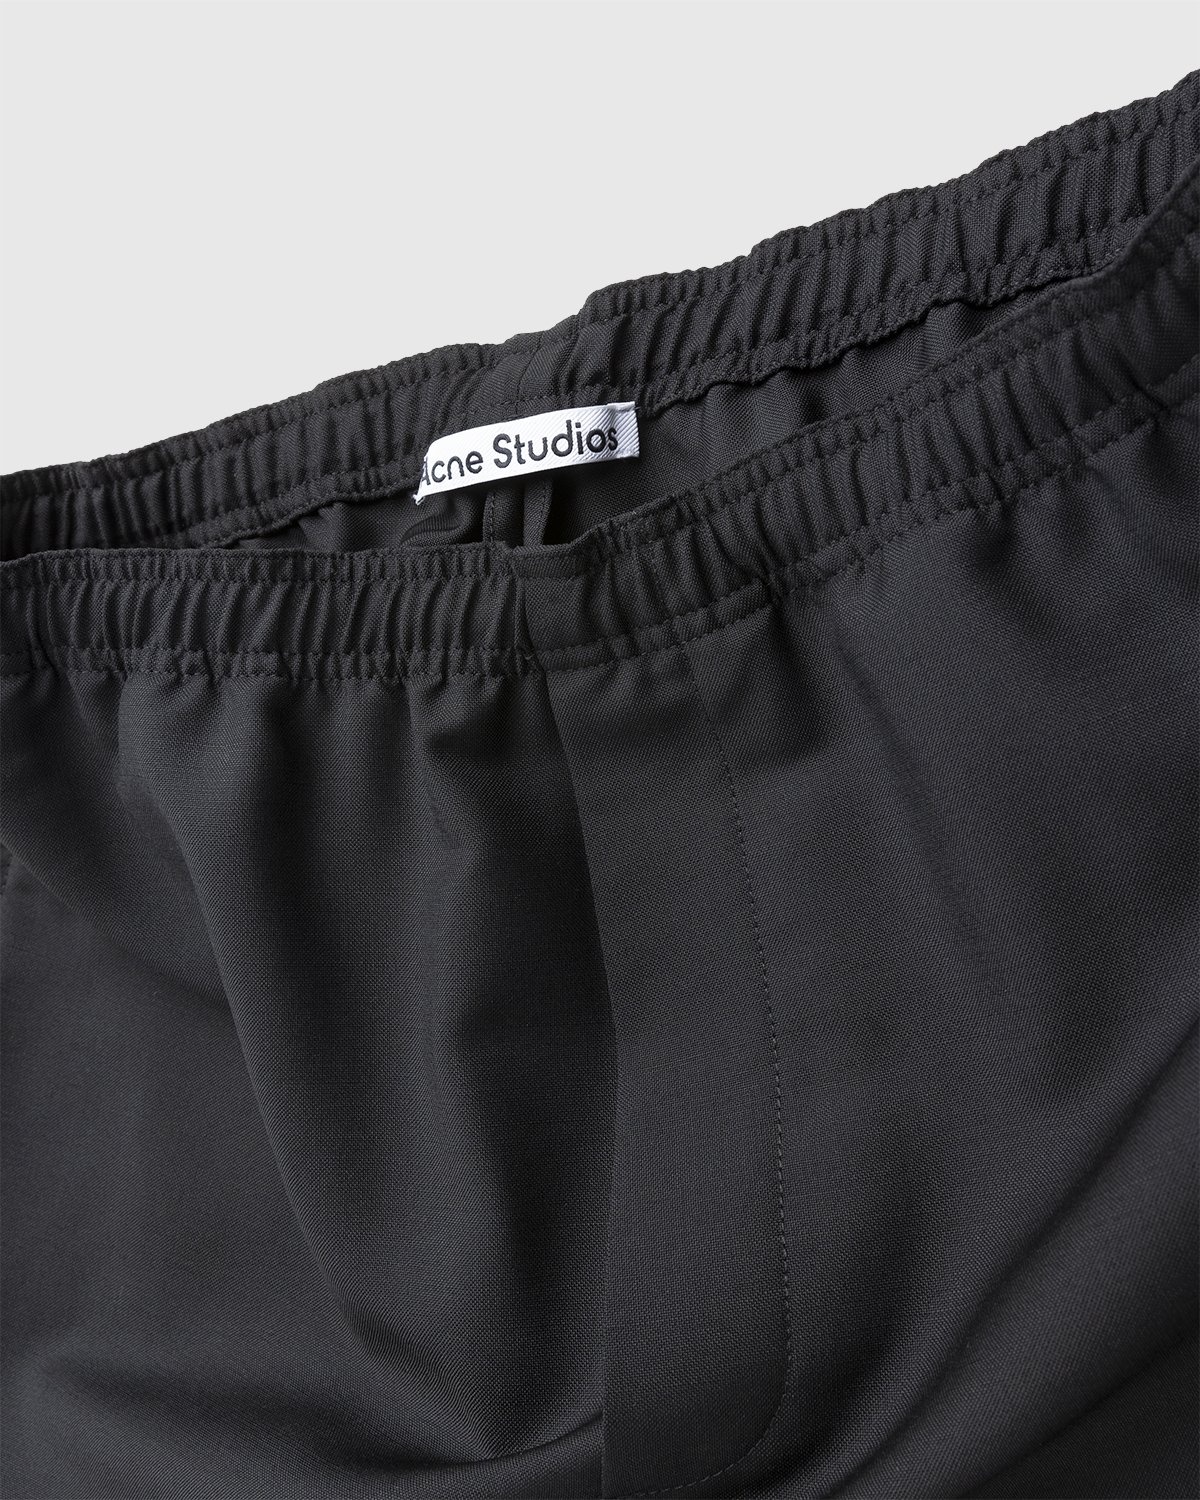 Acne Studios – Mohair Blend Drawstring Trousers Black - Trousers - Black - Image 4